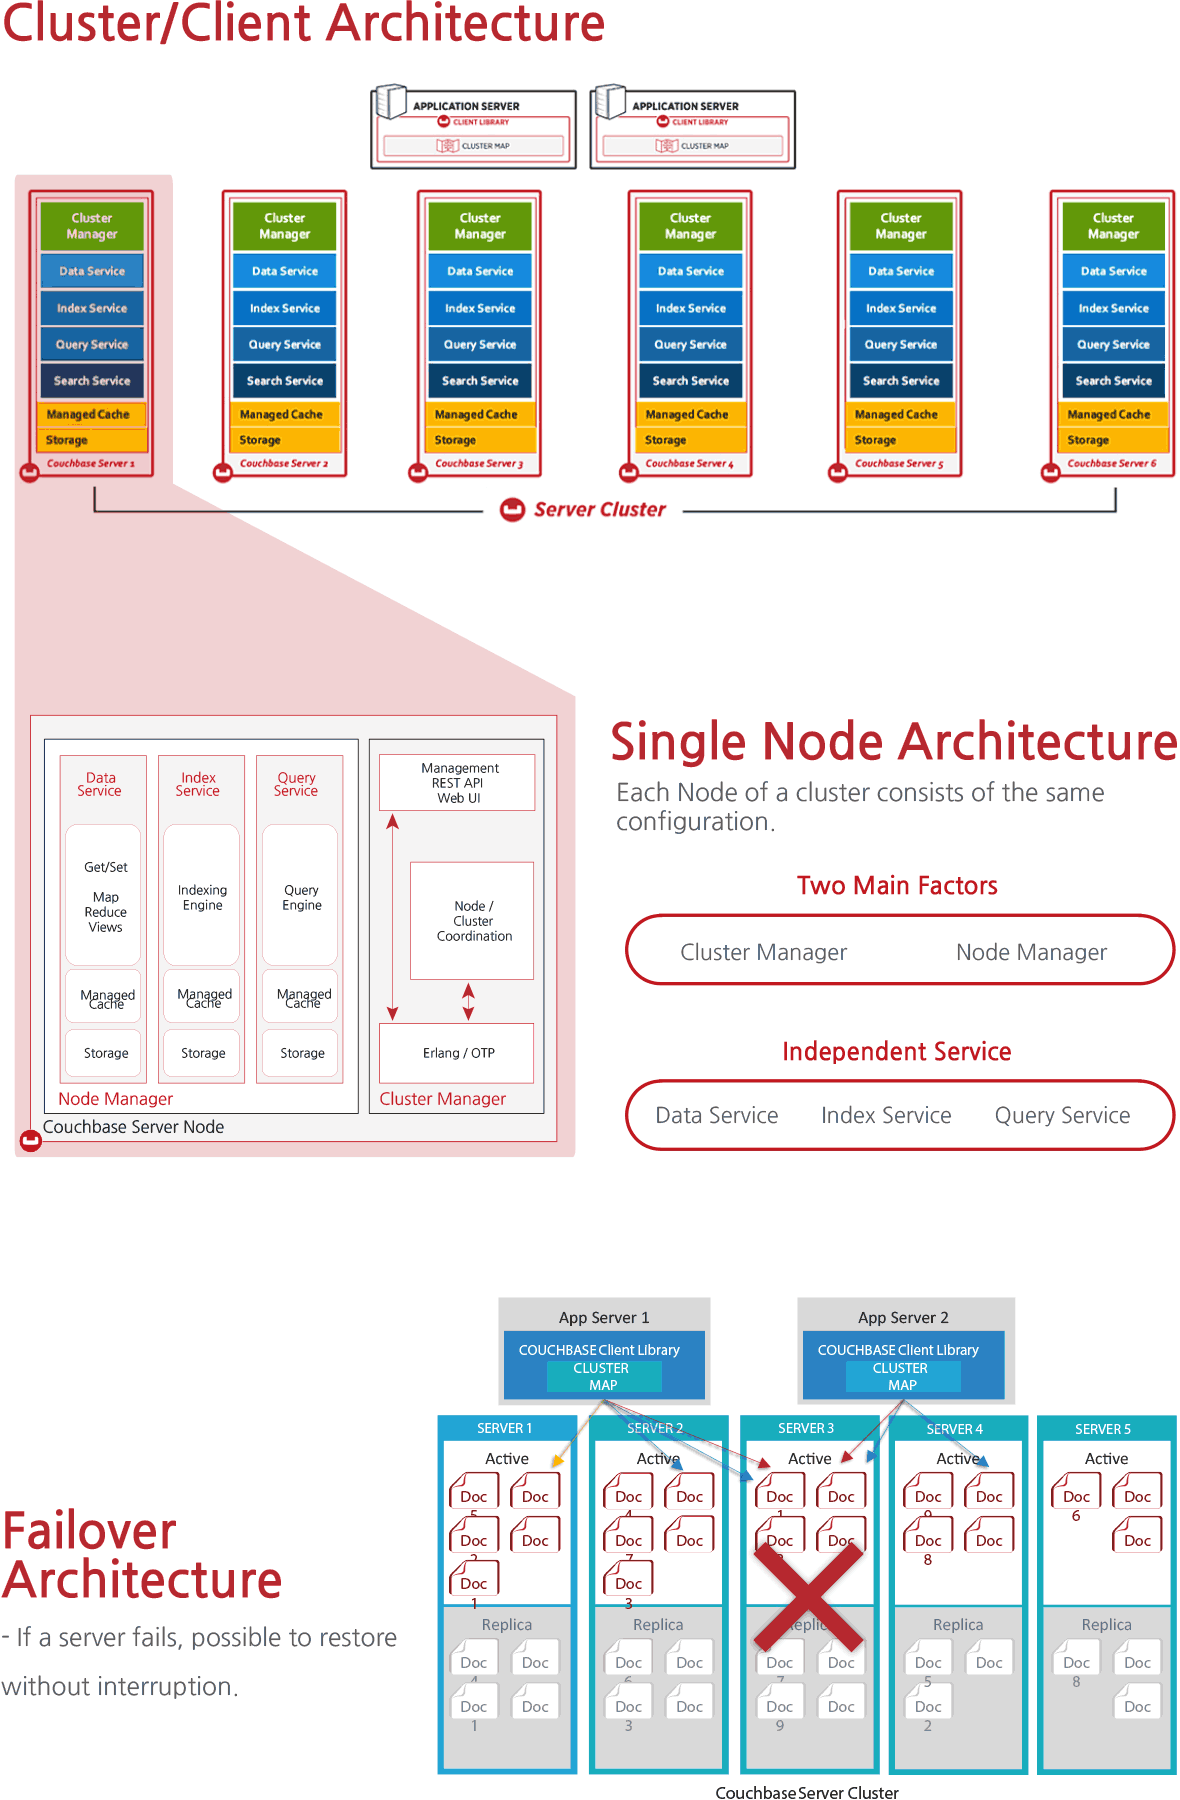 Cluster/Client Architecture, Single Node Architecture, Failover Architecture